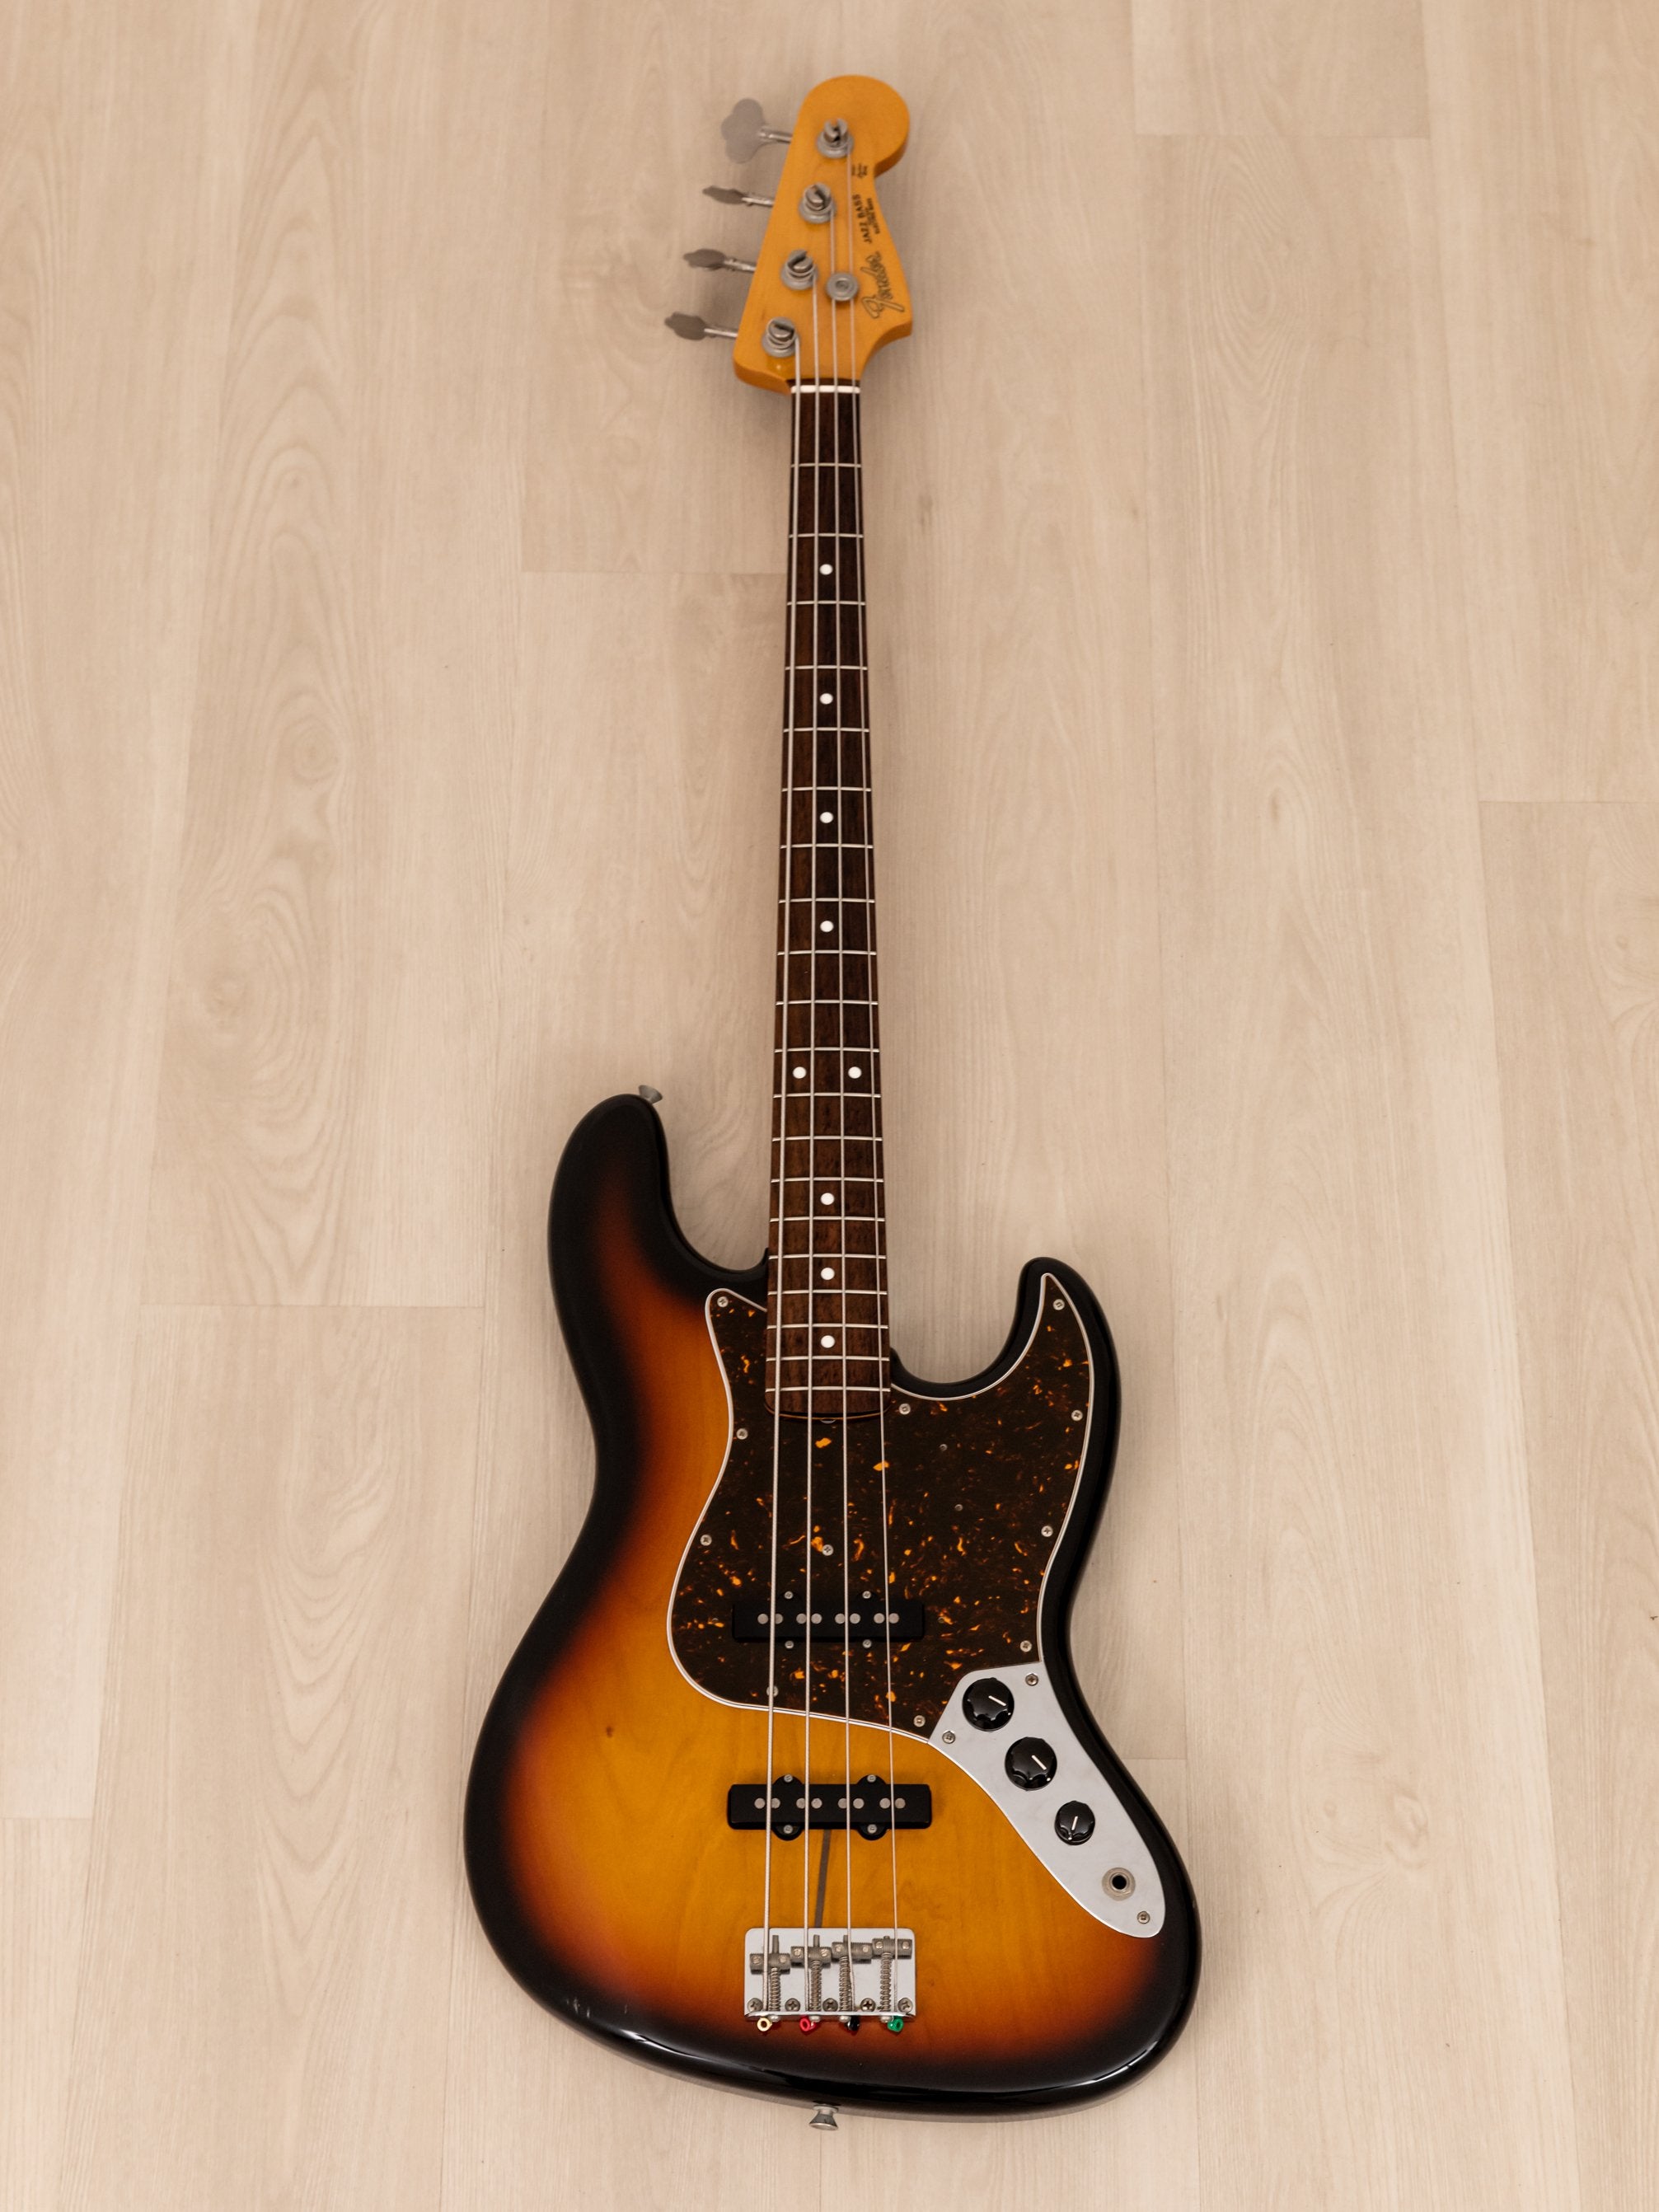 2014 Fender Jazz Bass '62 Vintage Reissue JB62/VSP, Sunburst Nitro Lacquer w/ USA Pickups, Japan MIJ